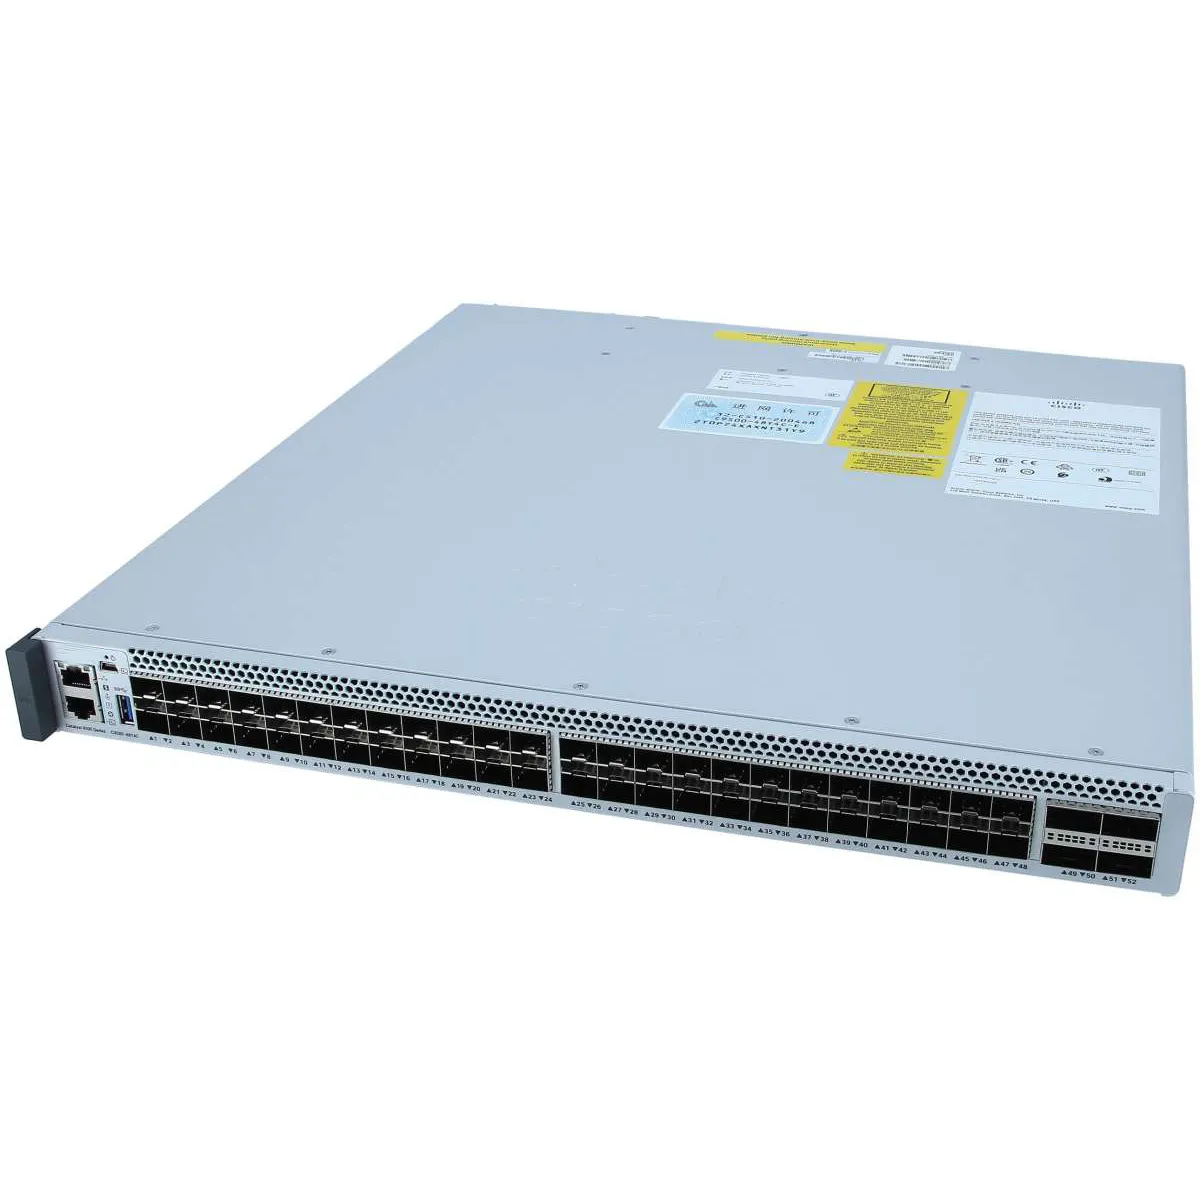 Brand new C9500-48Y4C-E Enterprise-class 48-port 25G SFP core switch 4 * 100G uplink